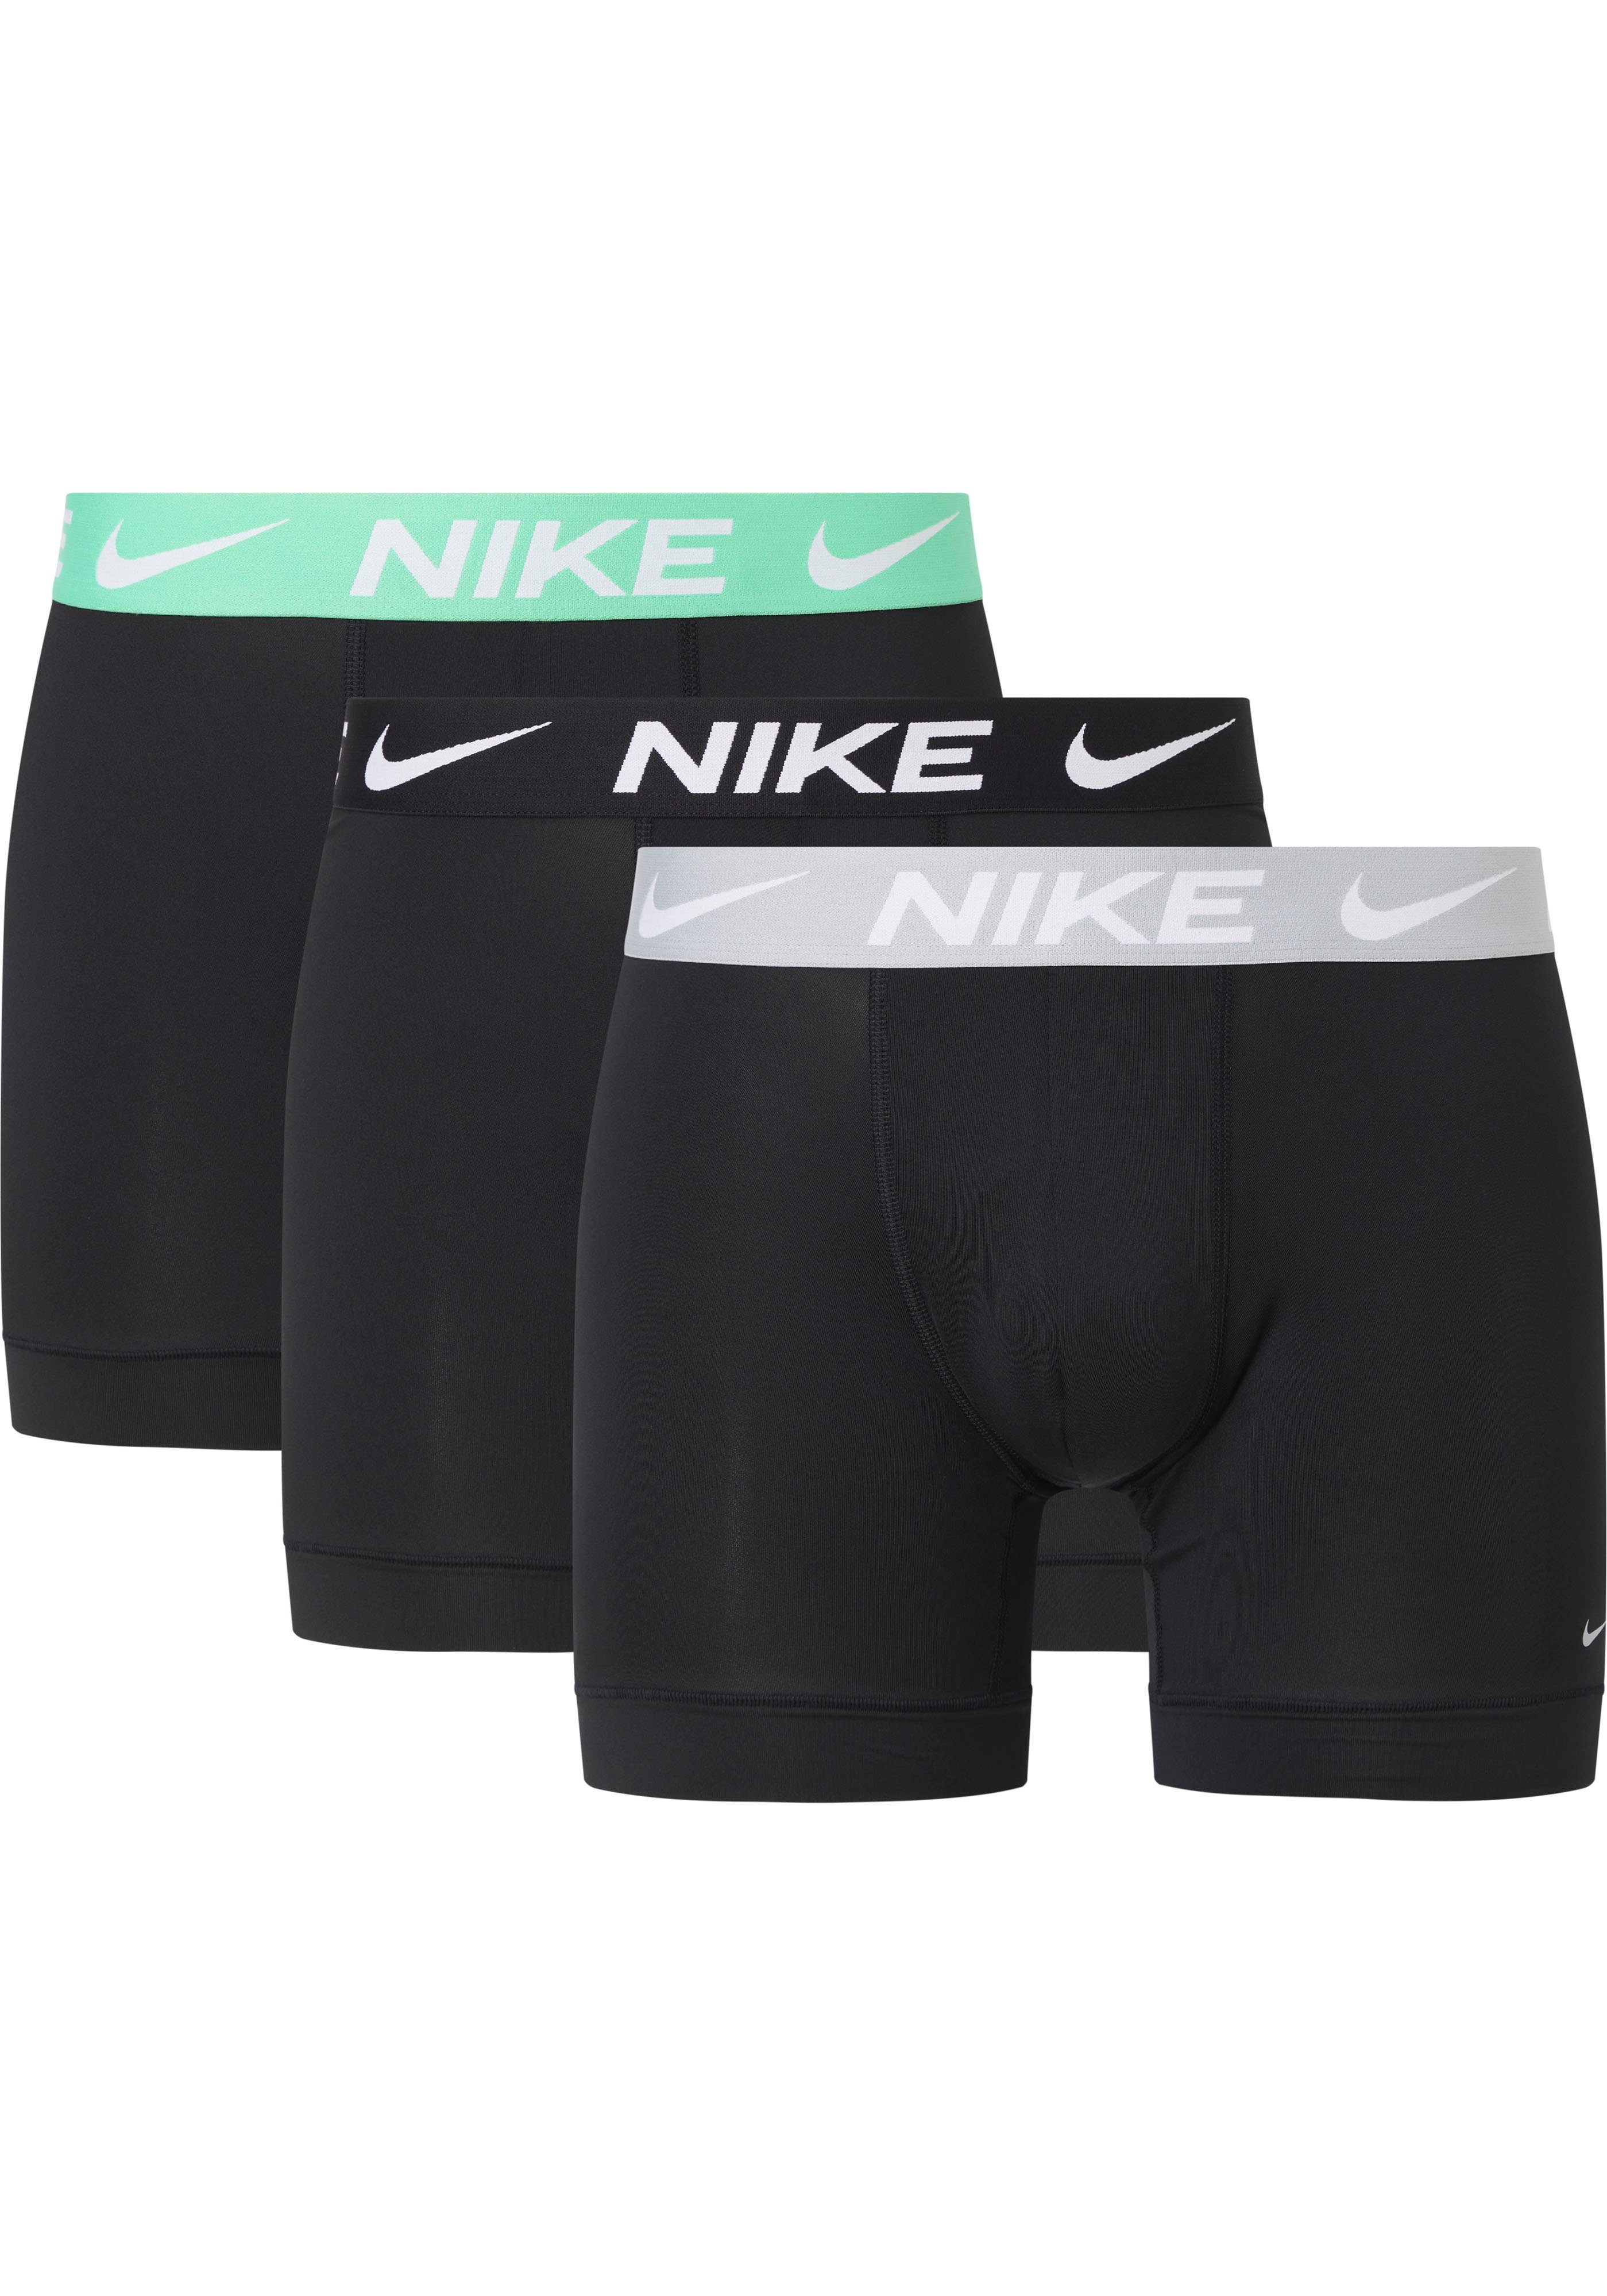 3PK BOXER NIKE Logo-Elastikbund Nike Underwear BRIEF 3er-Pack) mit BLK/ELECALGAE/GREY/BLK/BLK-WB 3-St., (Packung, Boxer